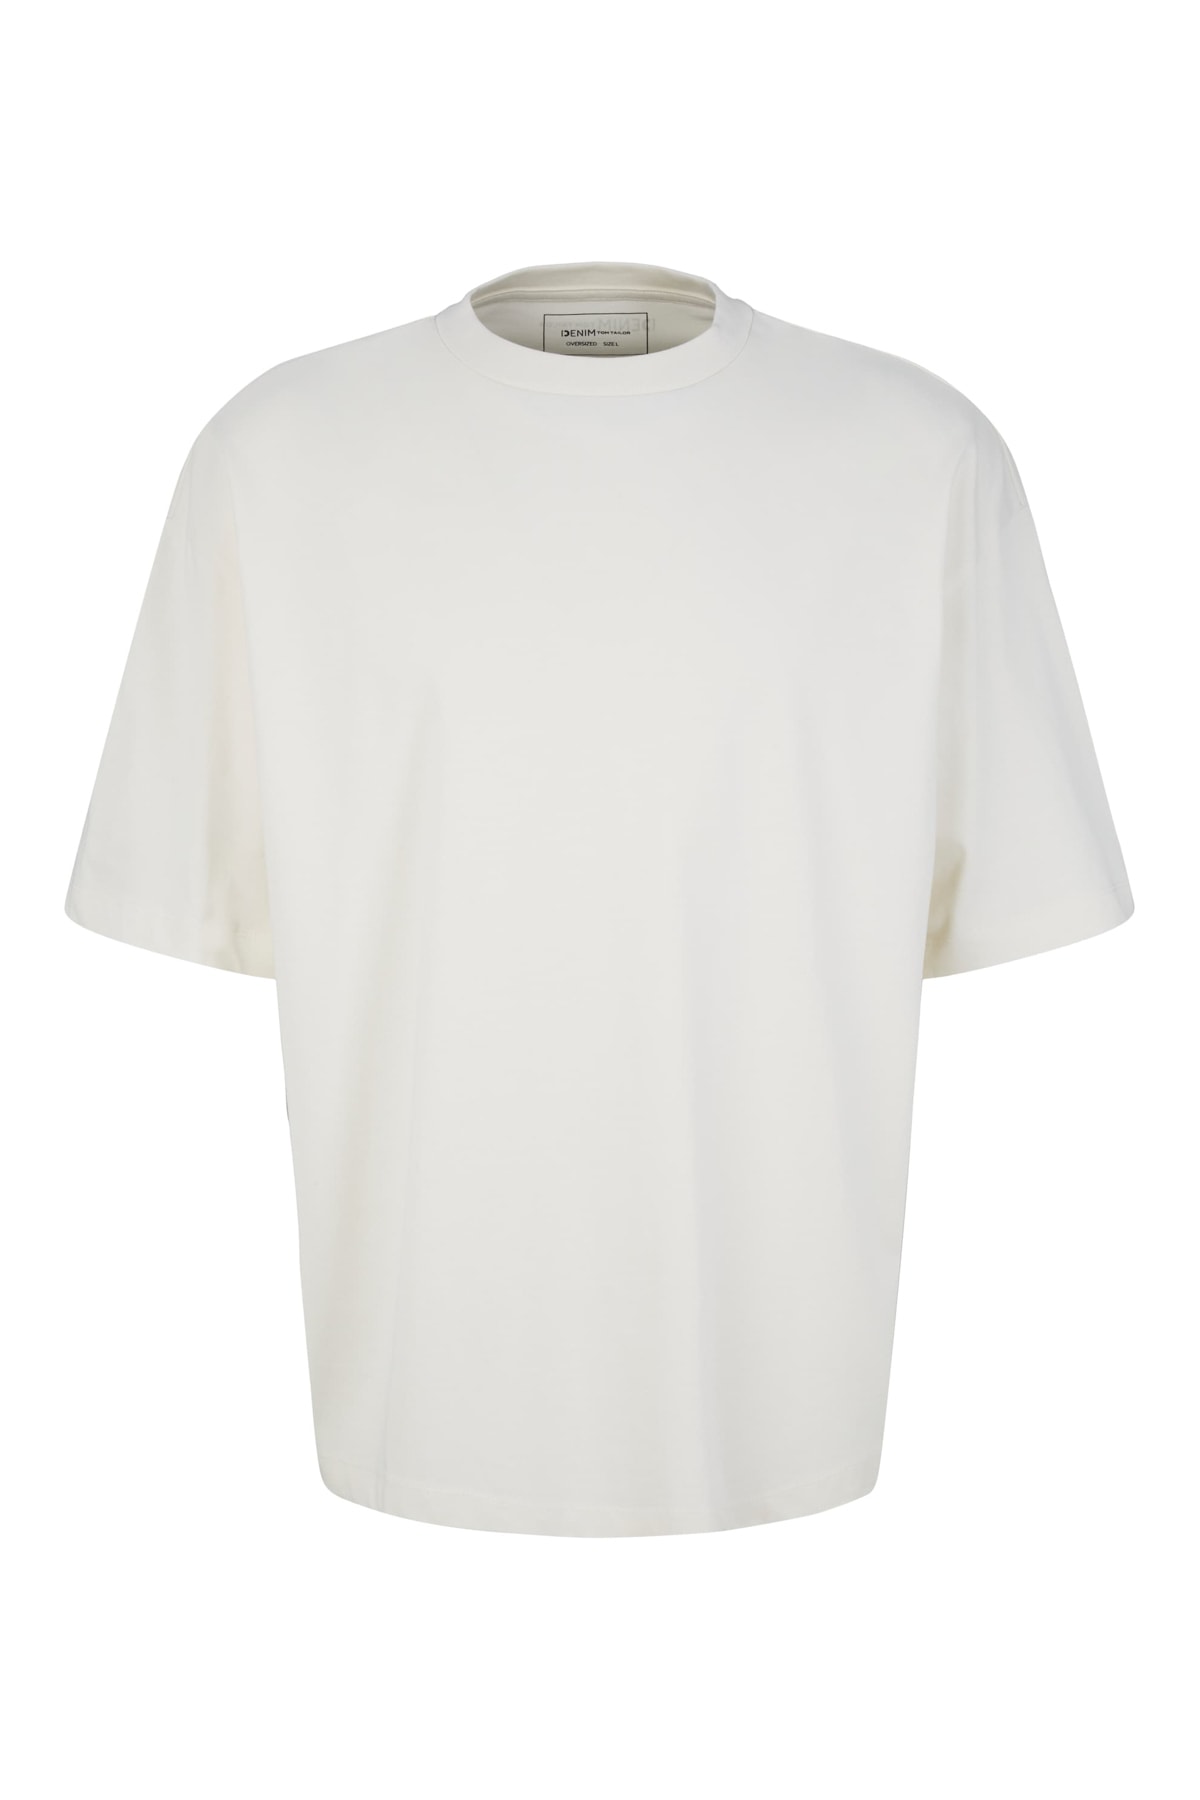 Tom Tailor Denim T-Shirt Weiß Regular Fit QV7251